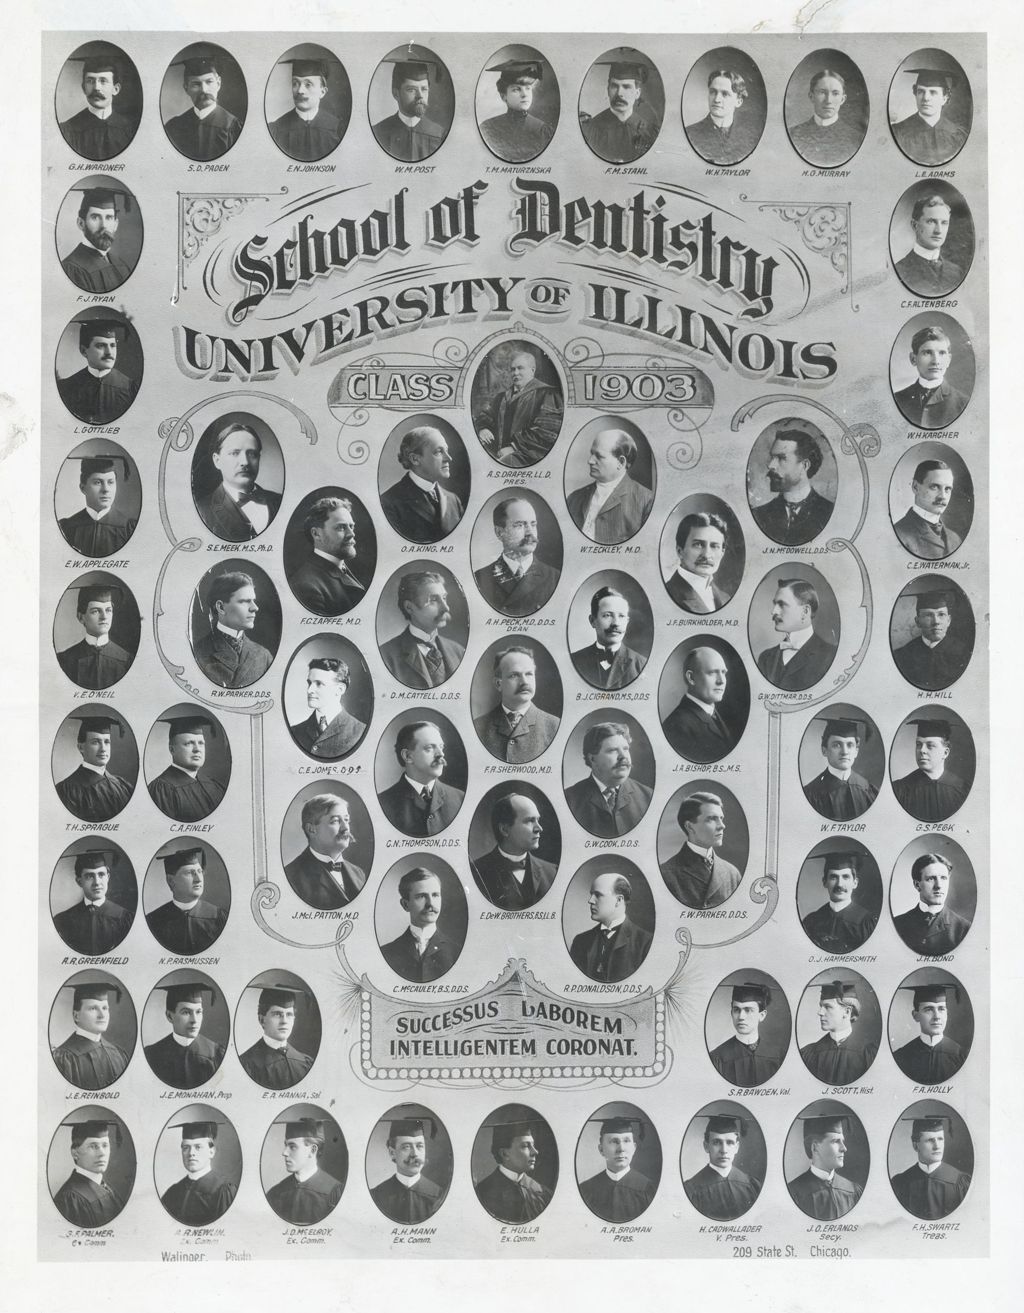 1903 graduating class, University of Illinois College of Dentistry